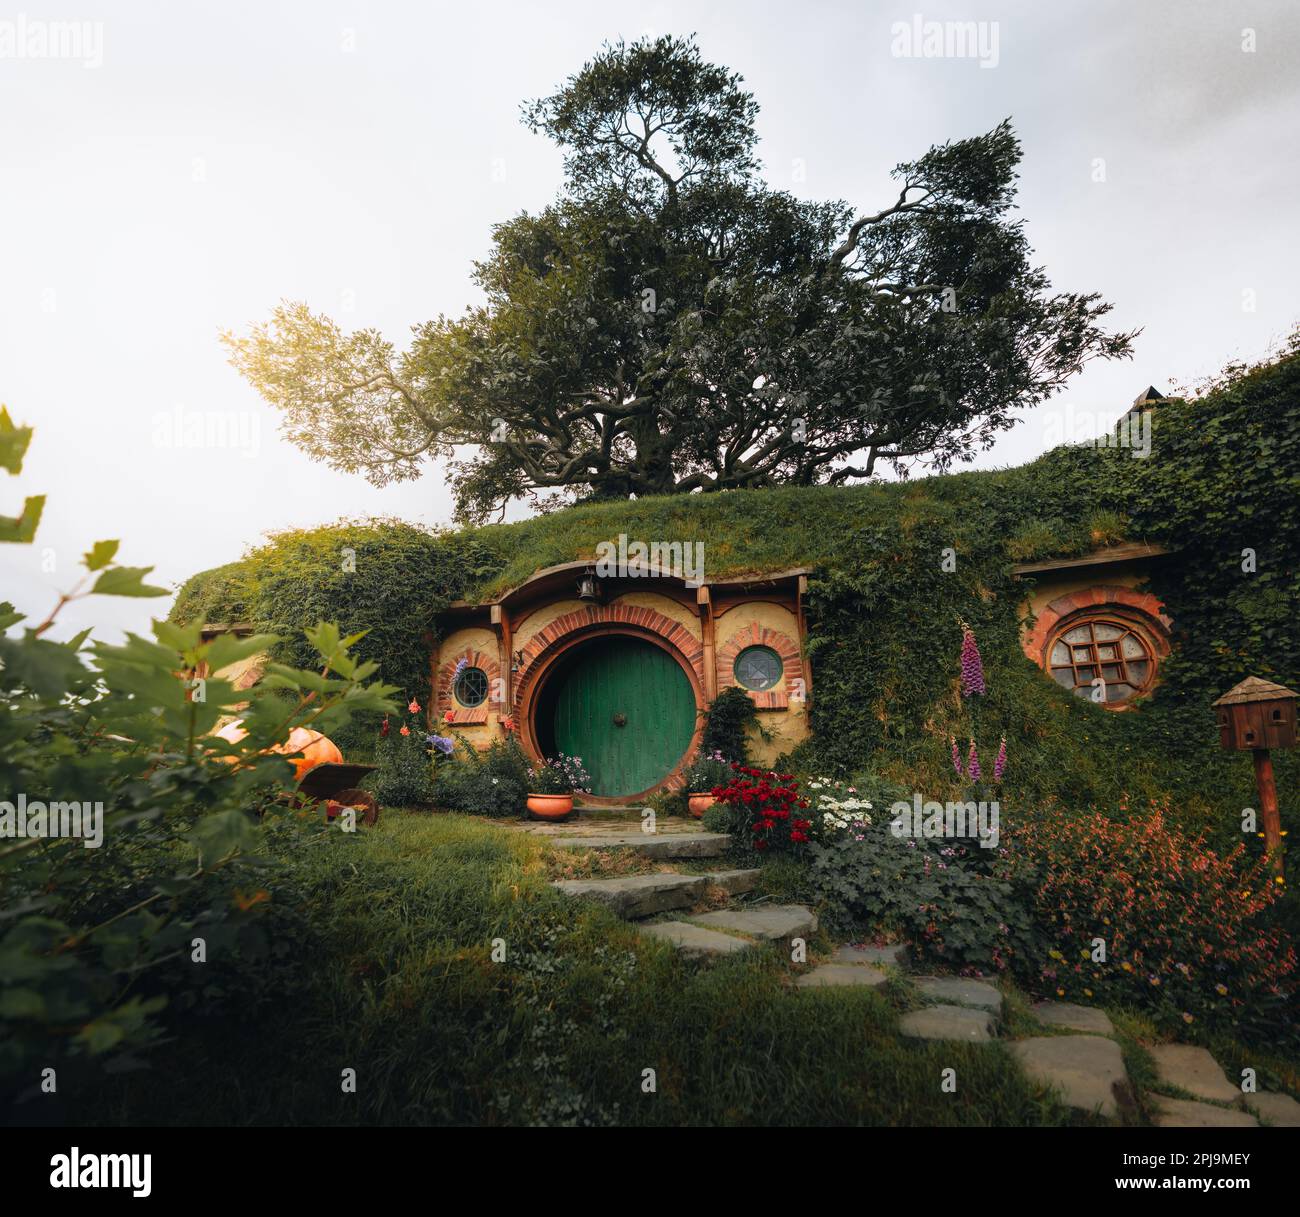 bilbo baggins home and hobbit garden in hobbiton movie set, new zealand. Taken during summer. Sunlight reflection. Travel and adventure concept. Stock Photo